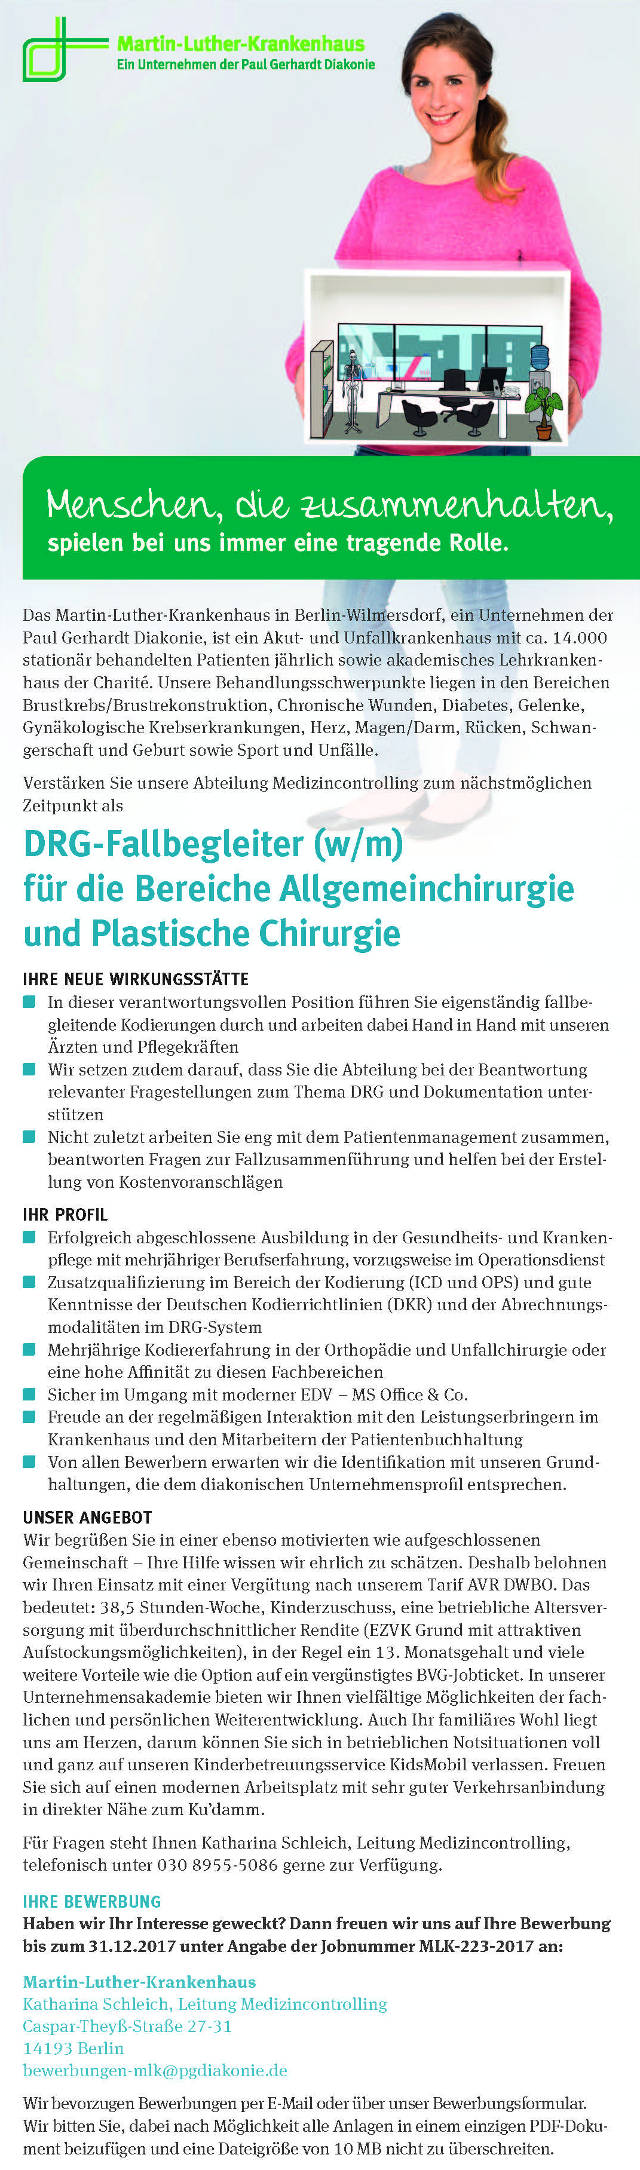 Martin-Luther-Krankenhaus, Berlin-Wilmersdorf: DRG-Fallbegleiter (w/m)